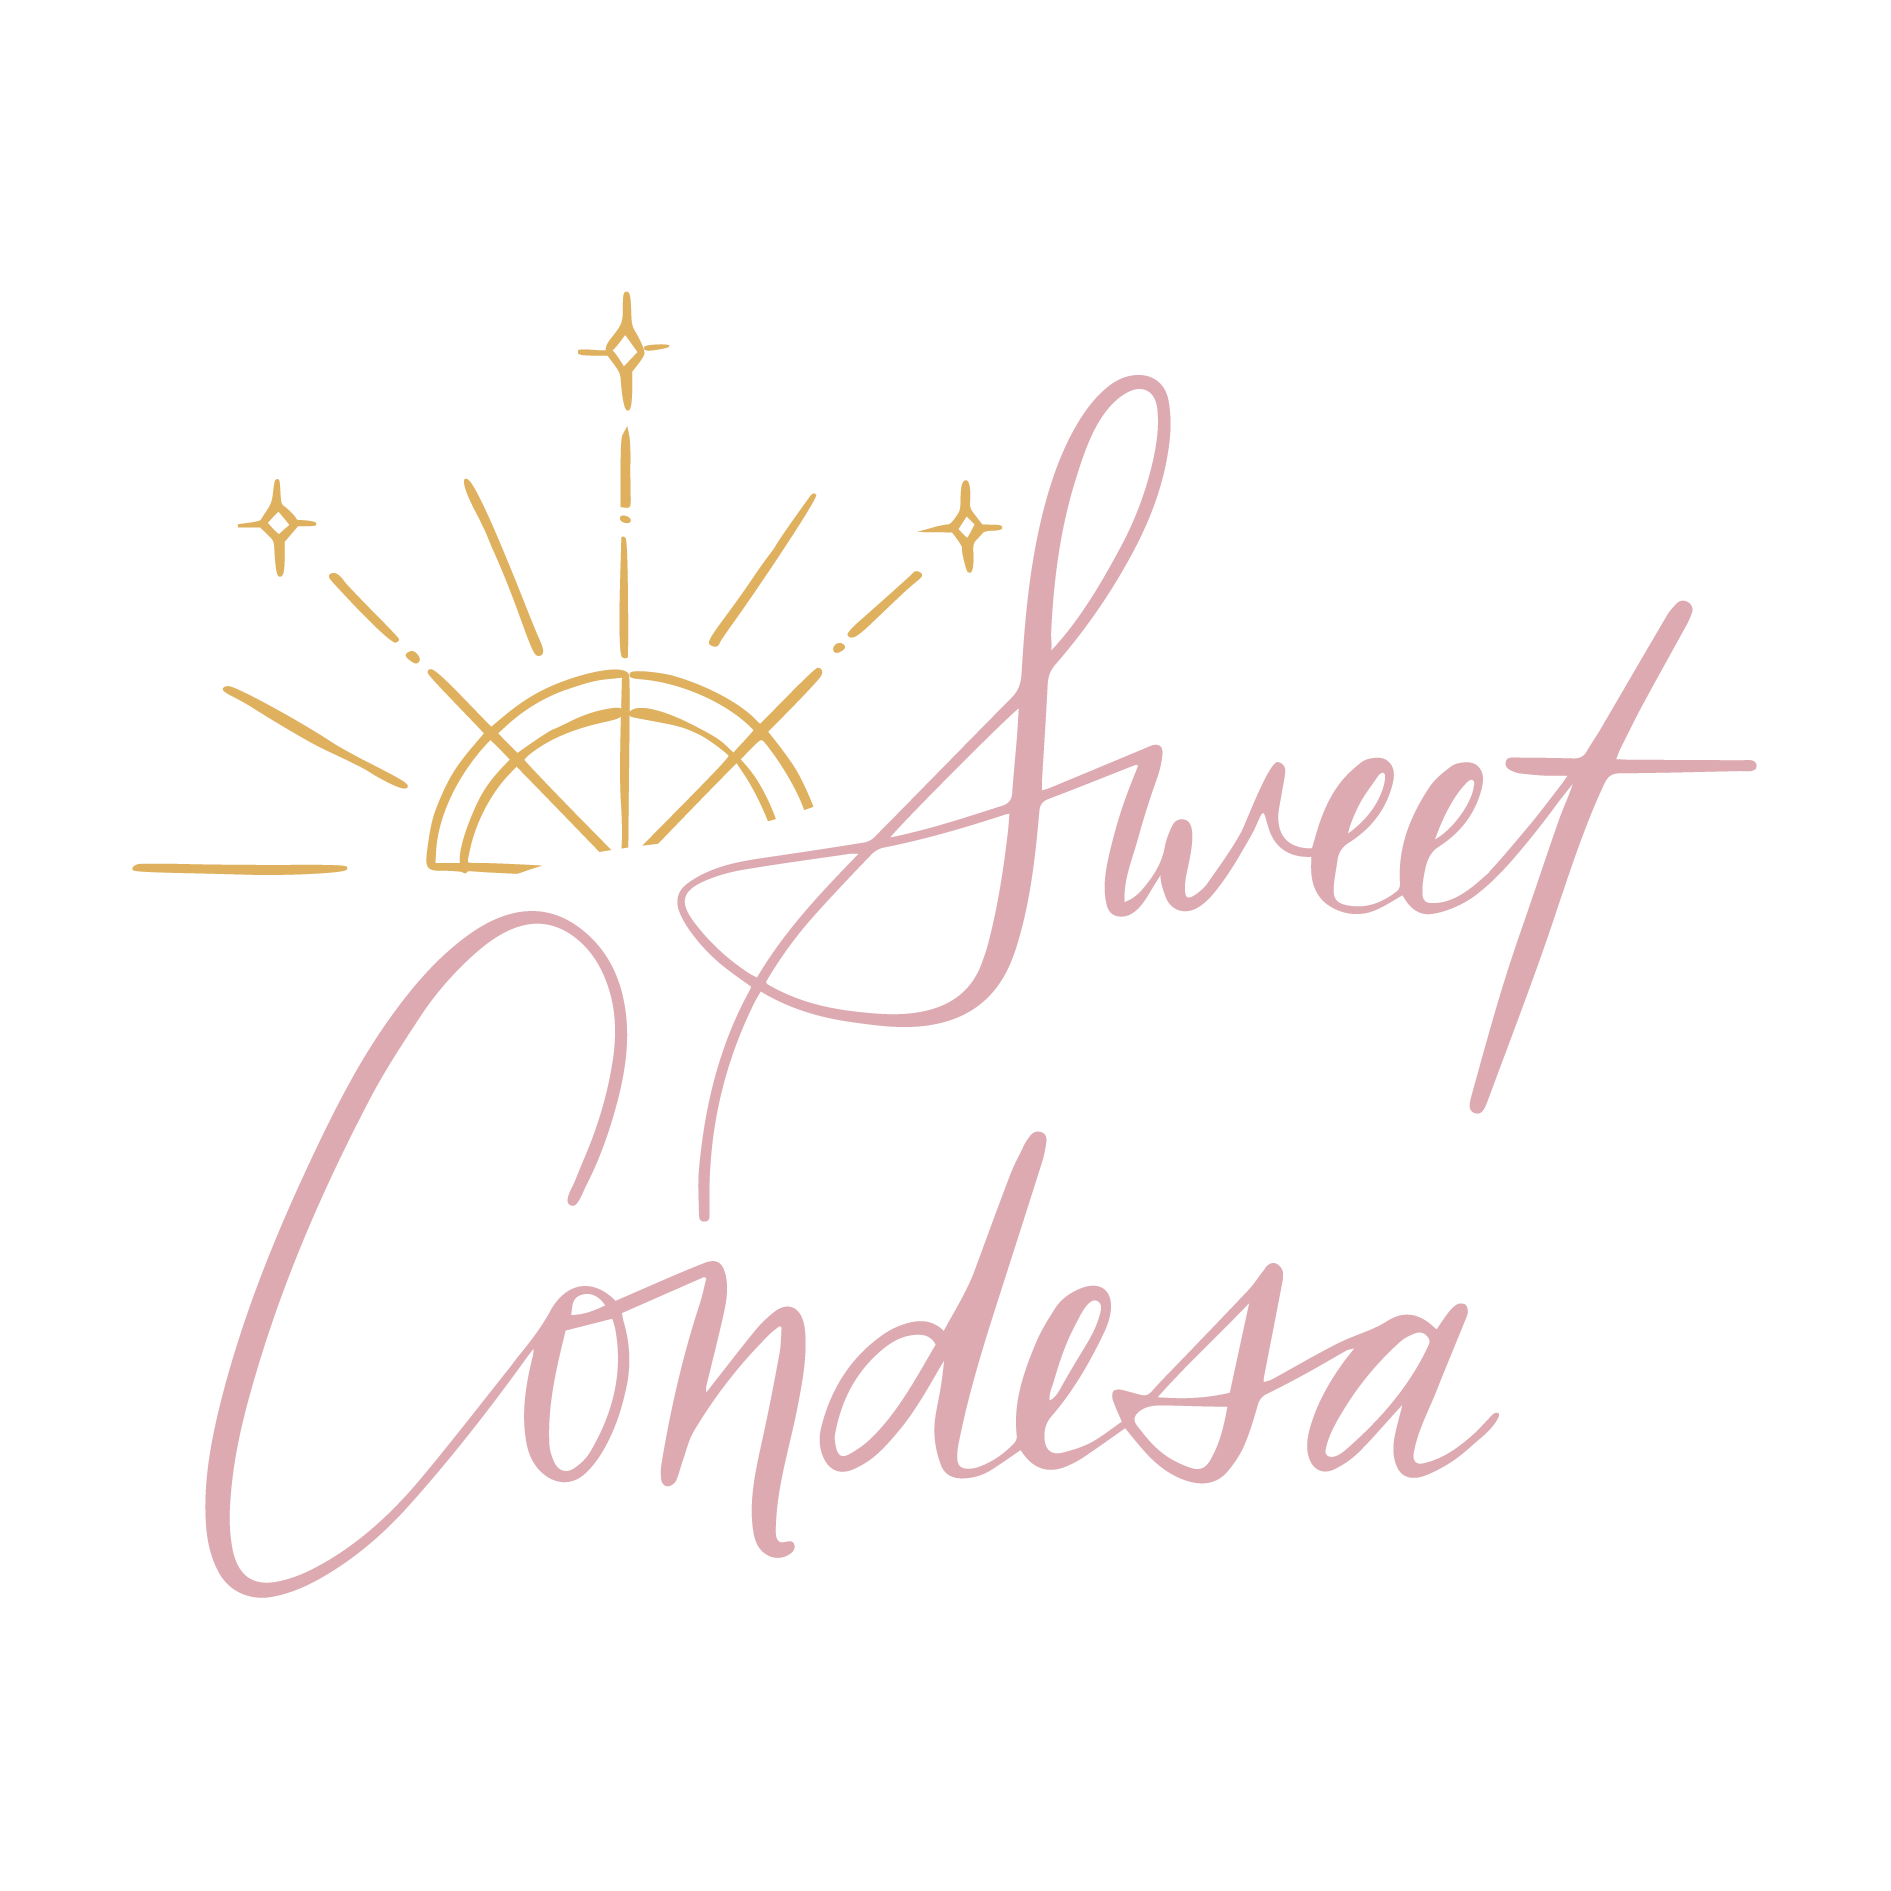 Sweet Condesa 